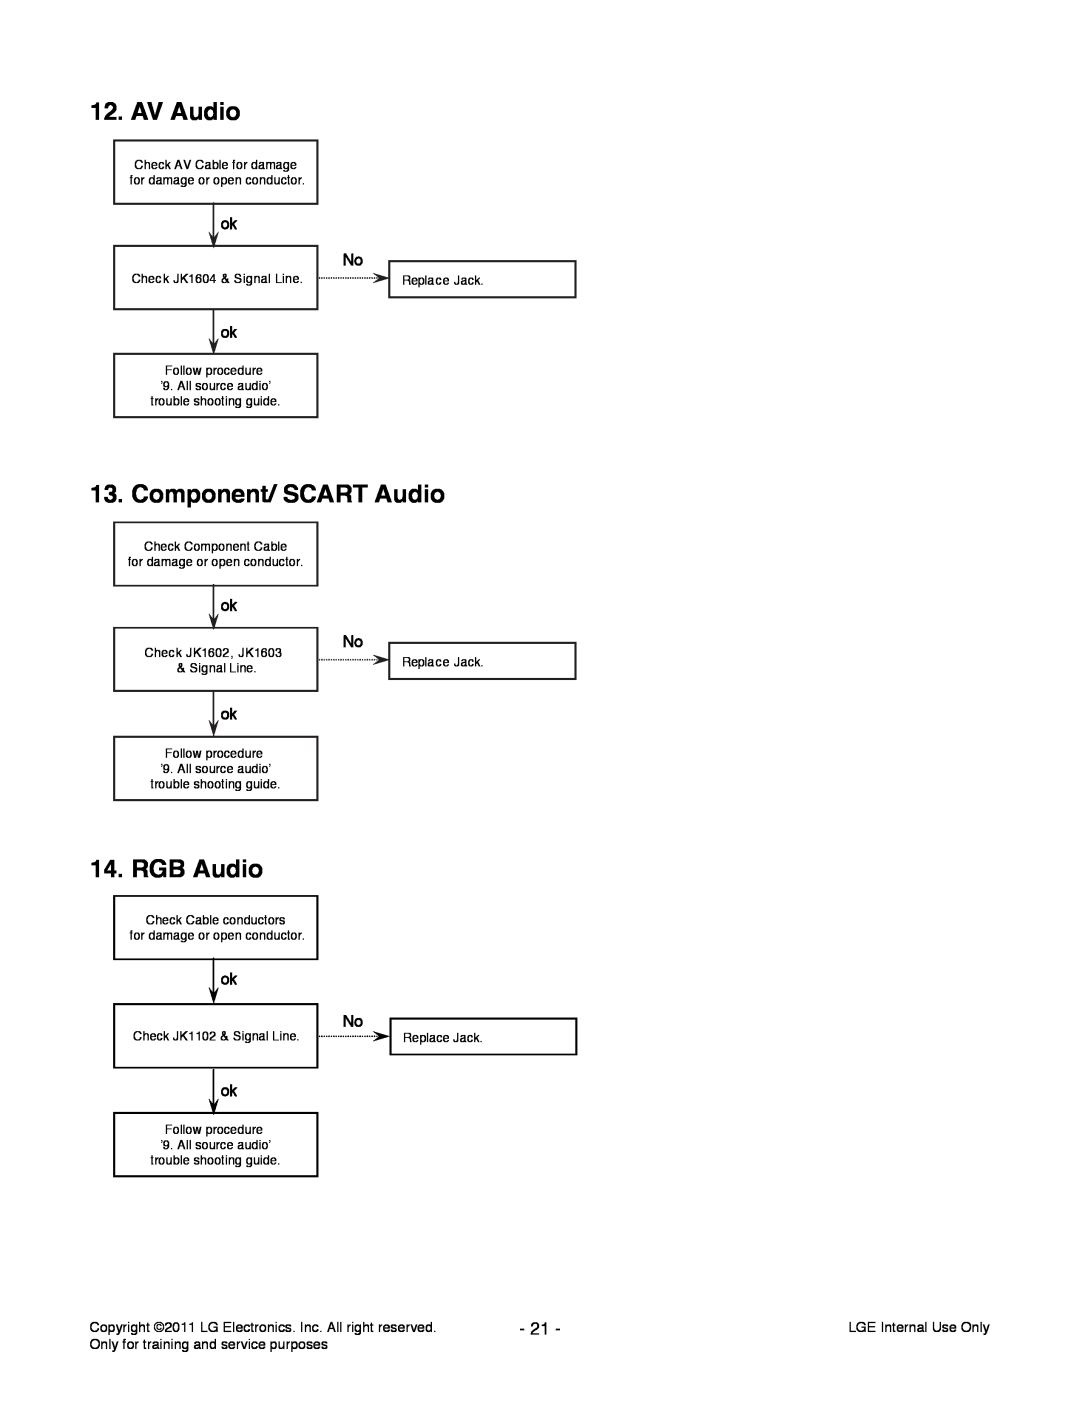 LG Electronics 42CS560-ZD service manual AV Audio, Component/ SCART Audio, RGB Audio 